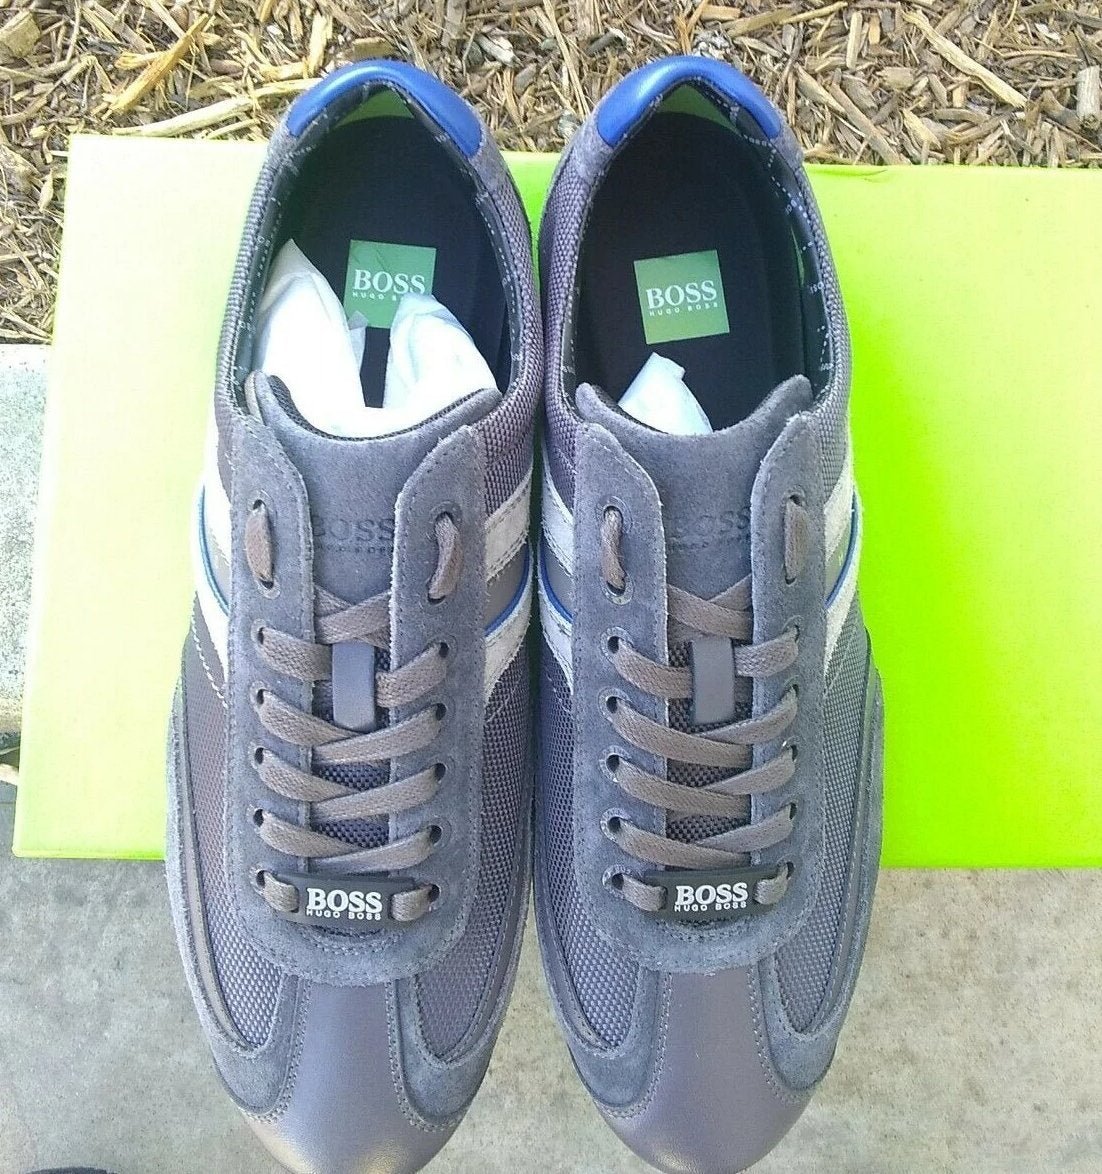 Hugo Boss men Casual Shoes Stiven Charcoal Size 8 US